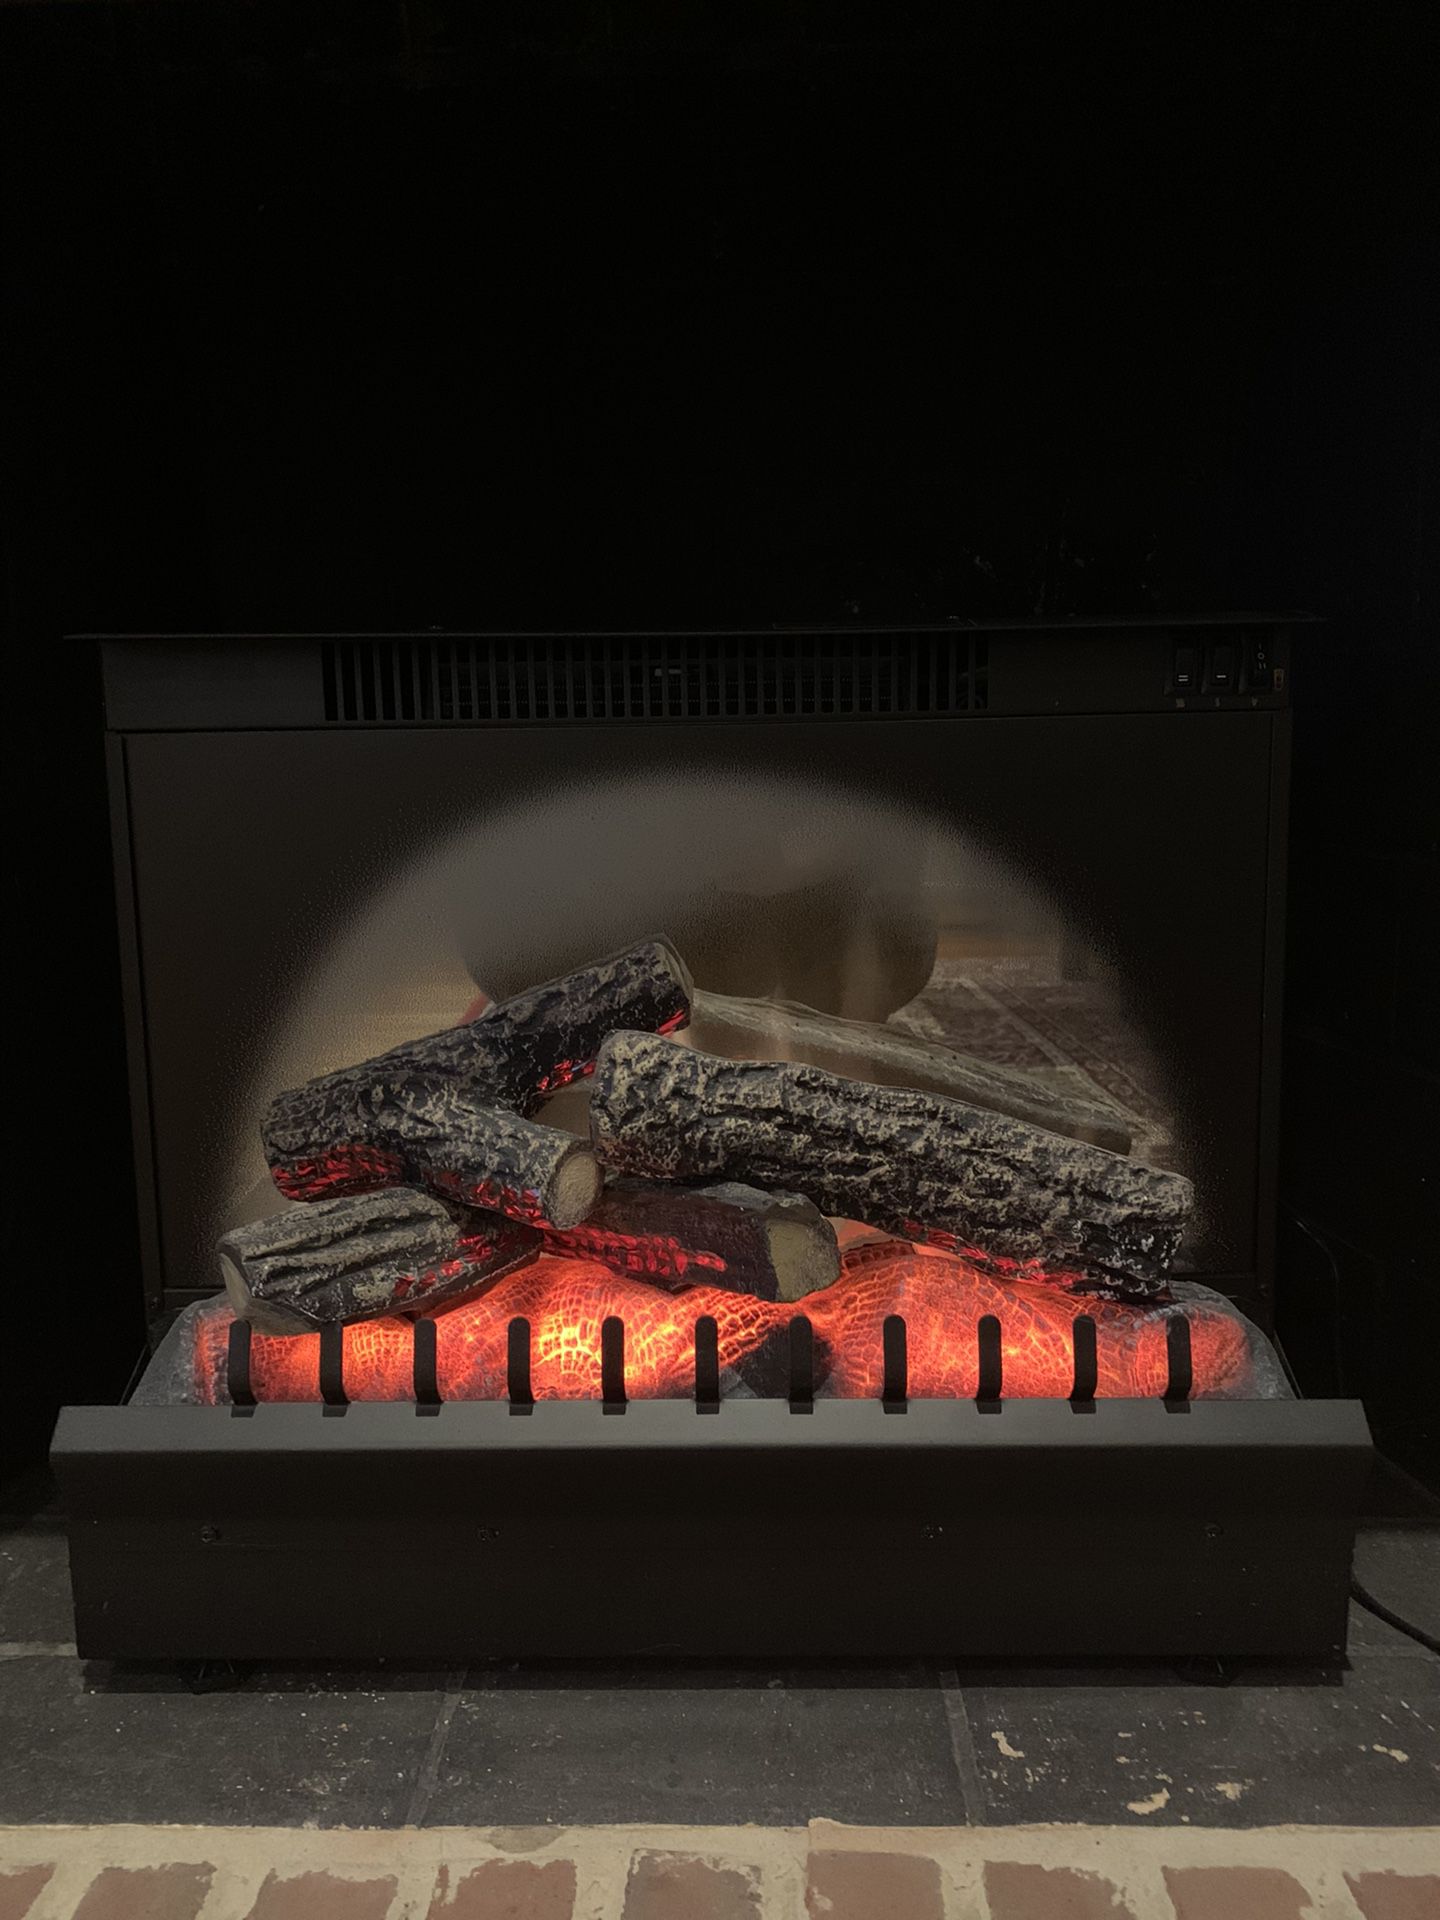 Electric fireplace heater - plug in